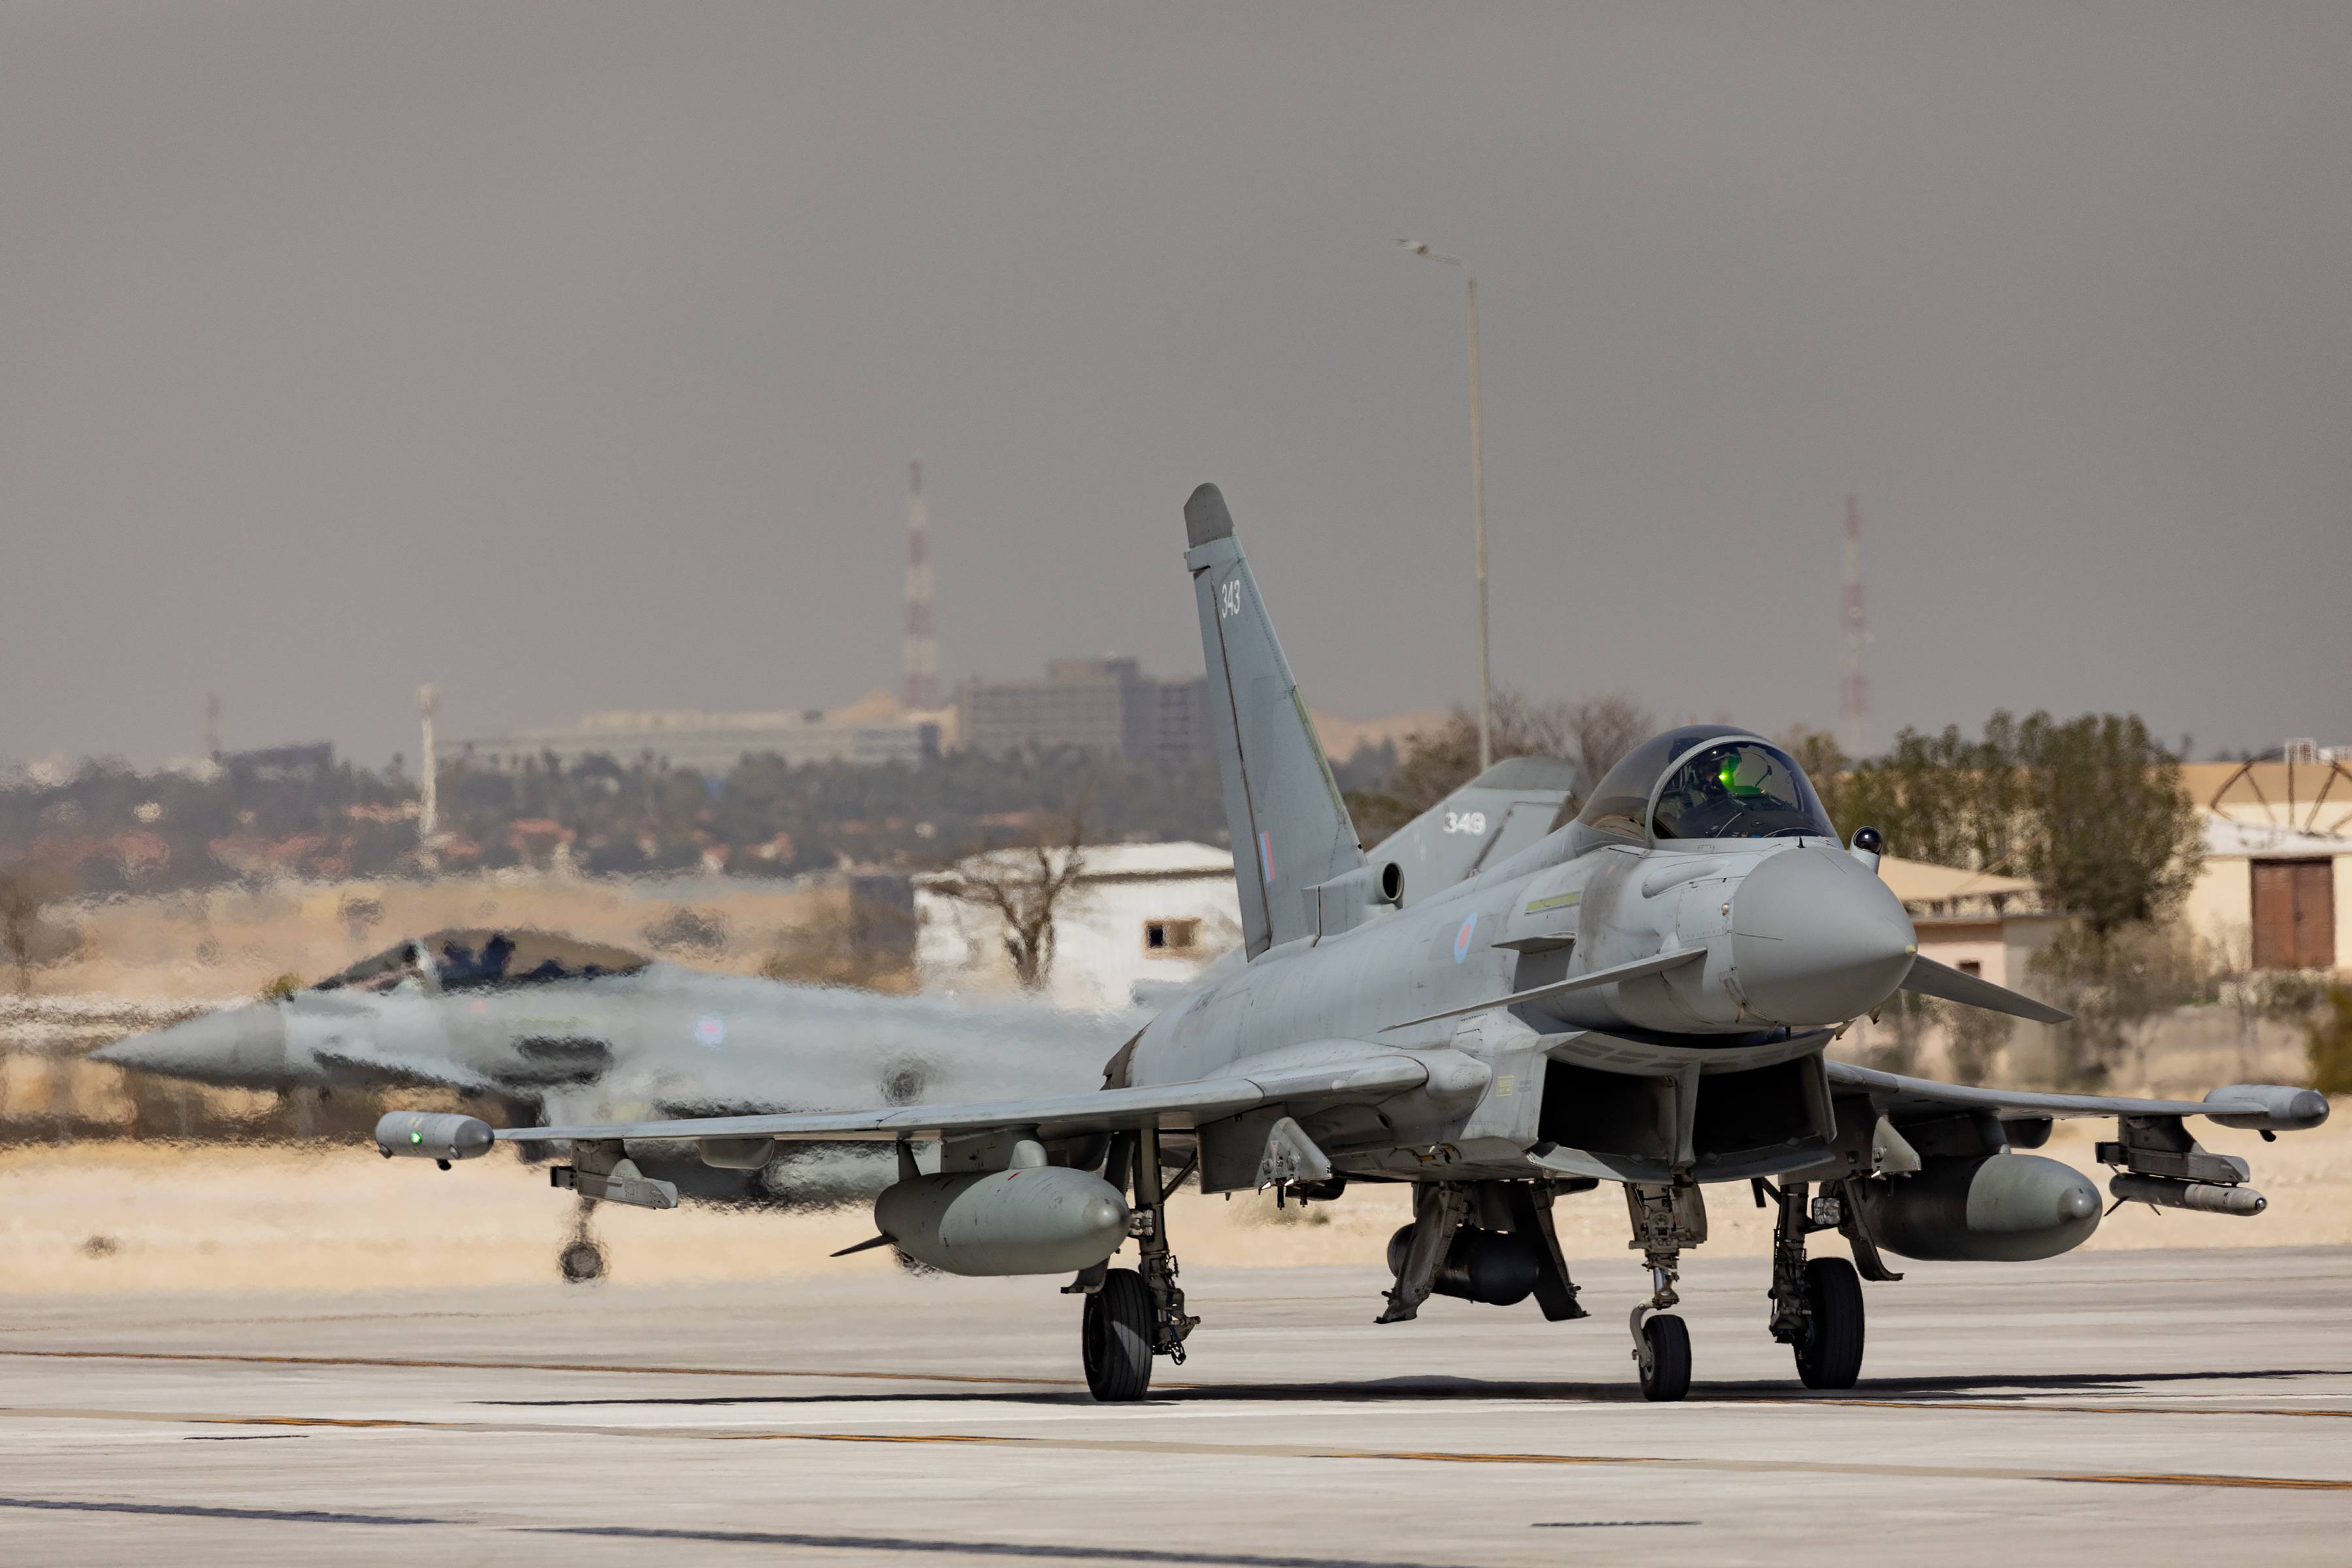 Image shows RAF Typhoon on the airfield in Saudi Arabia.